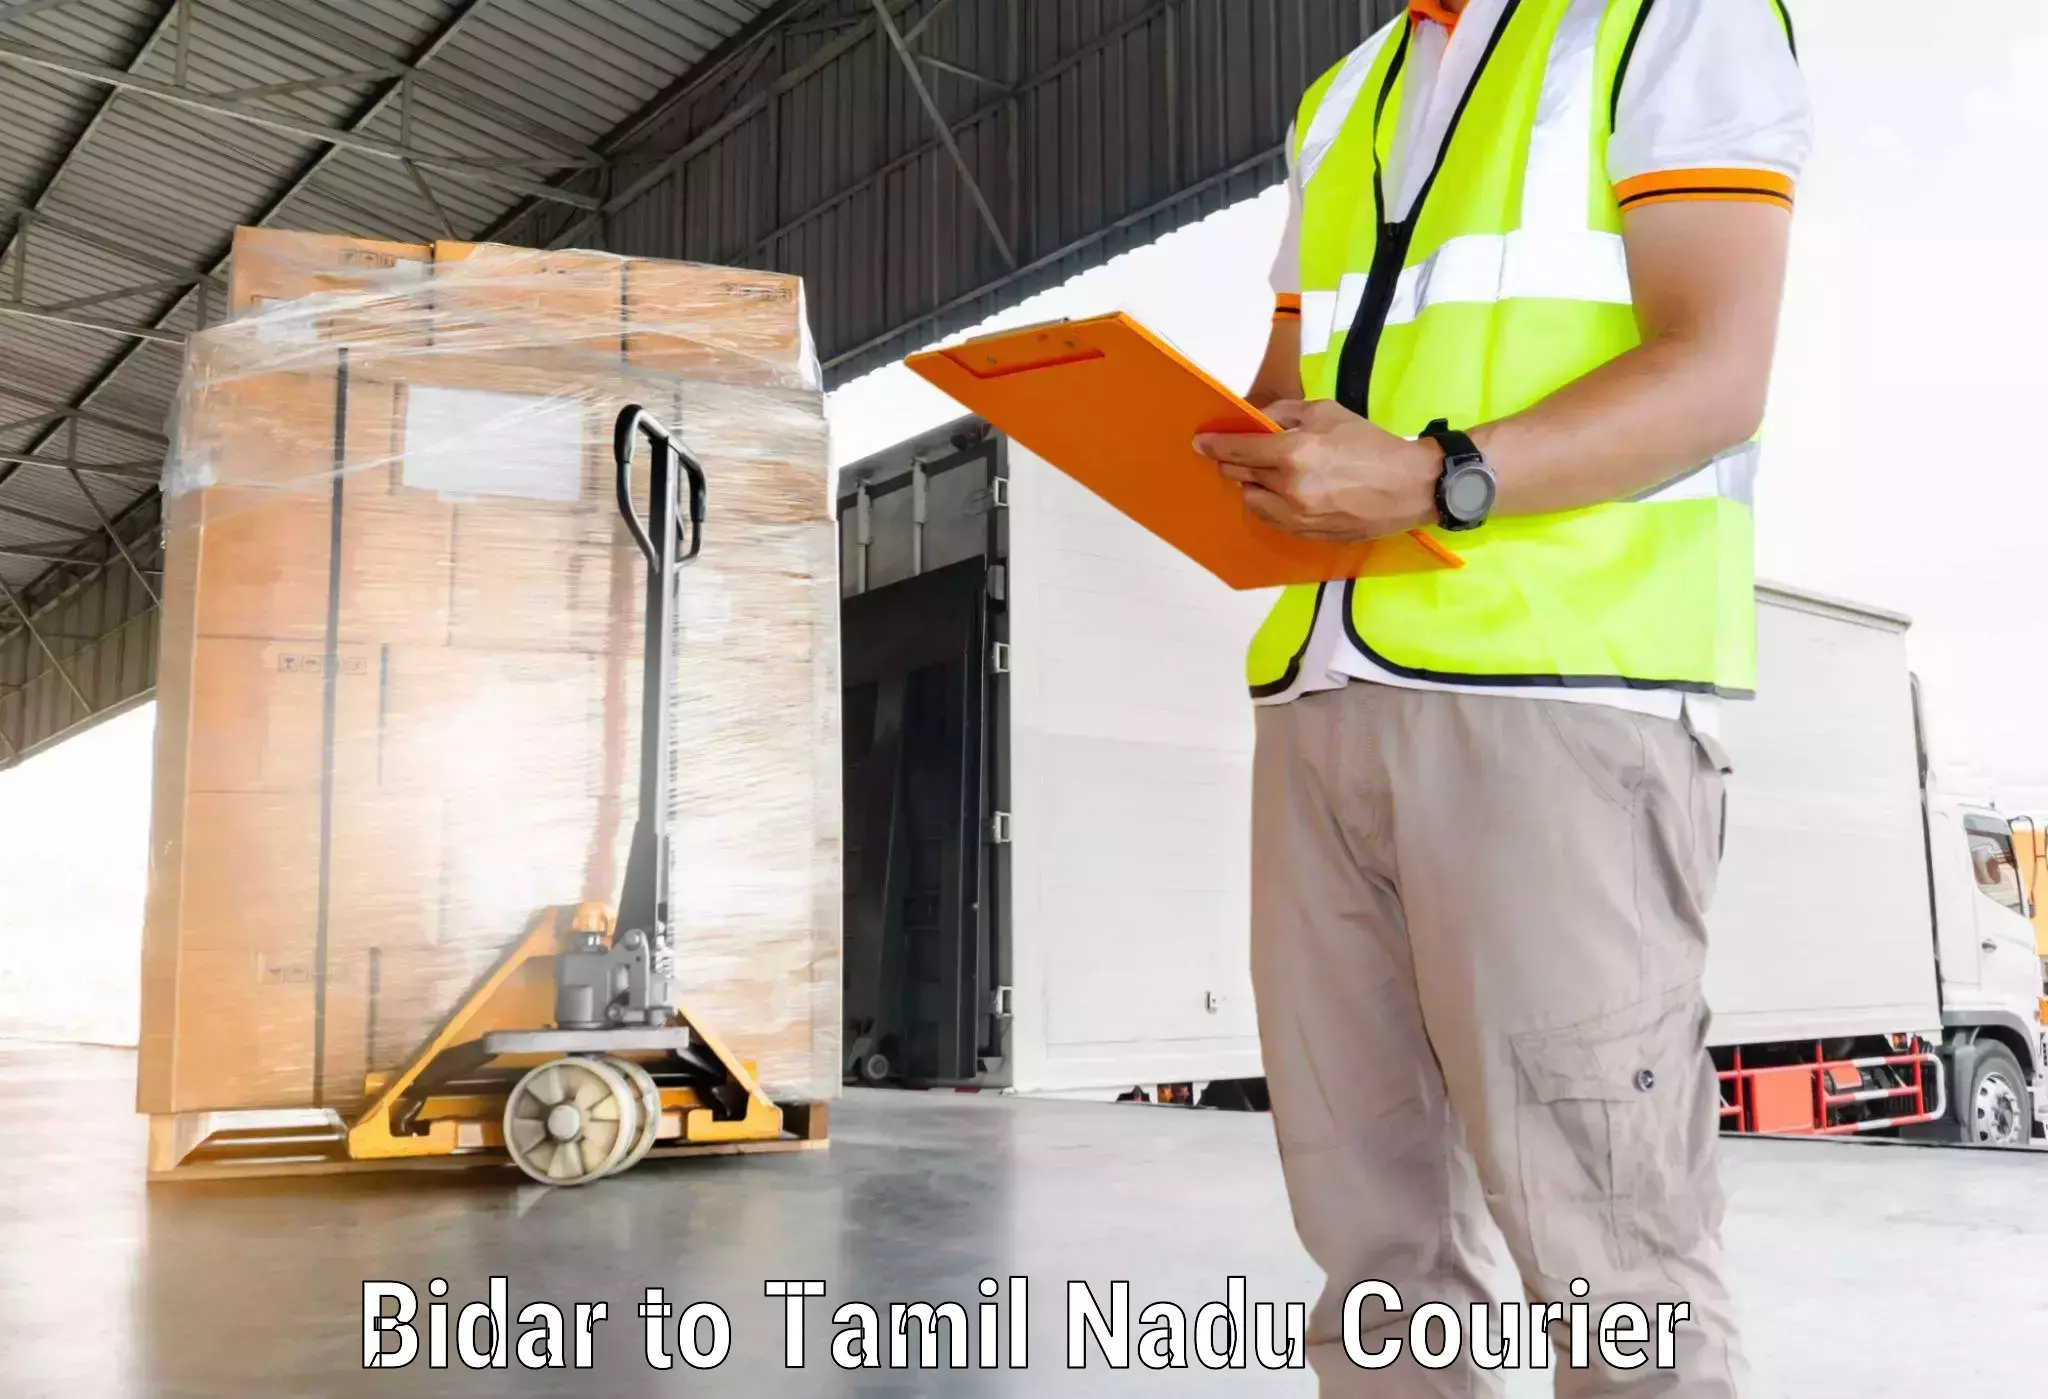 Next-day delivery options Bidar to Melmaruvathur